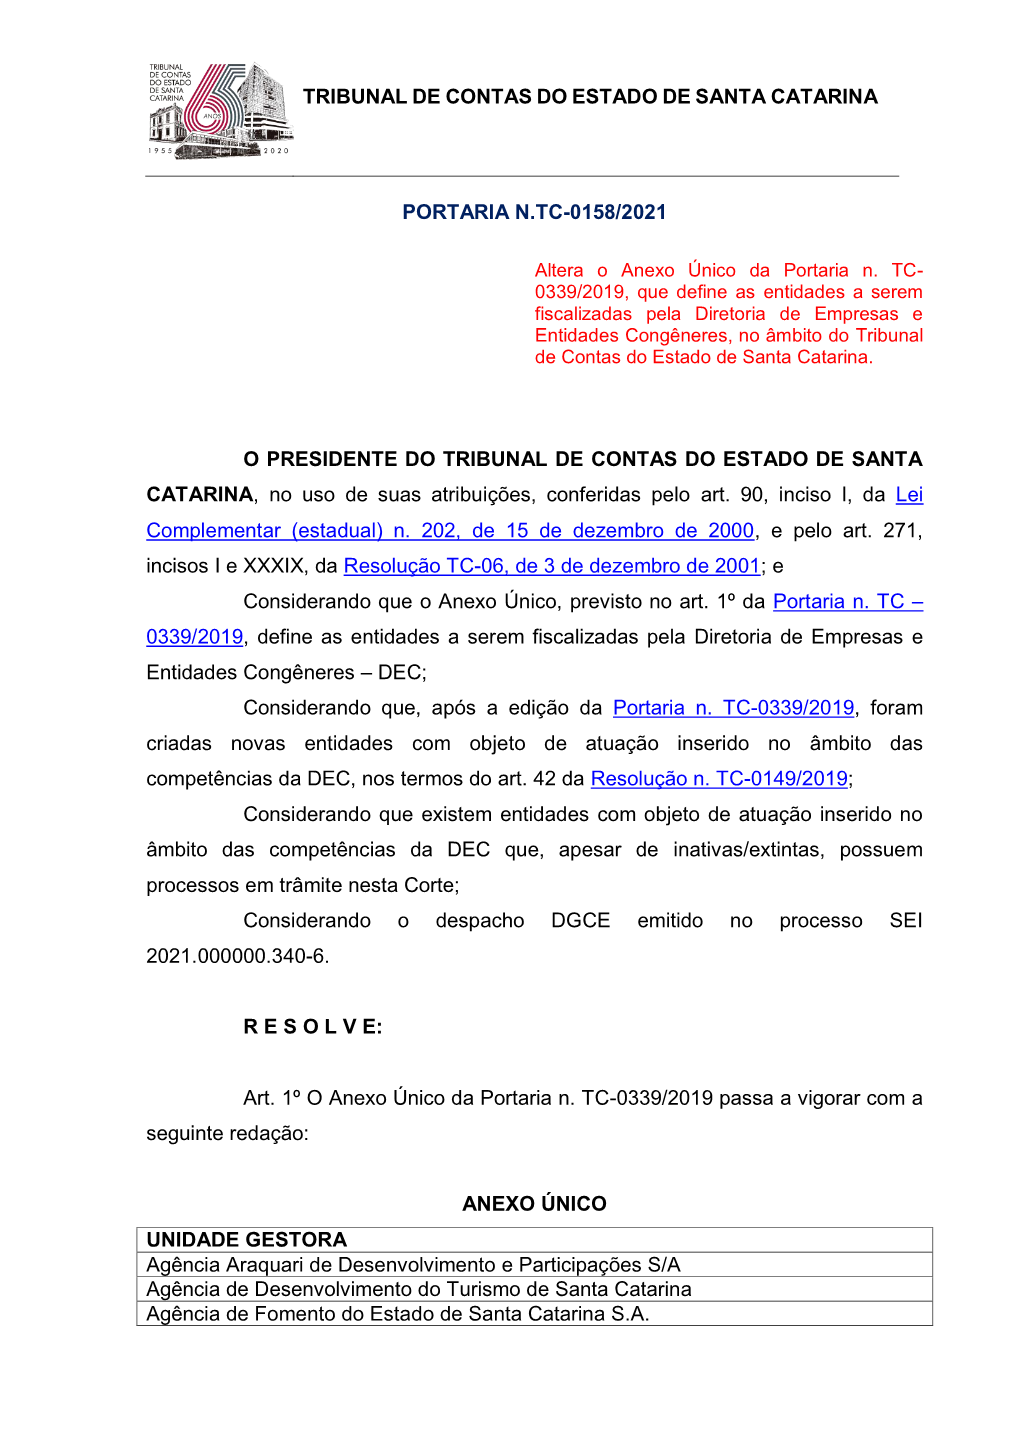 PORTARIA N.TC 158-2021 CONSOLIDADA.Pdf